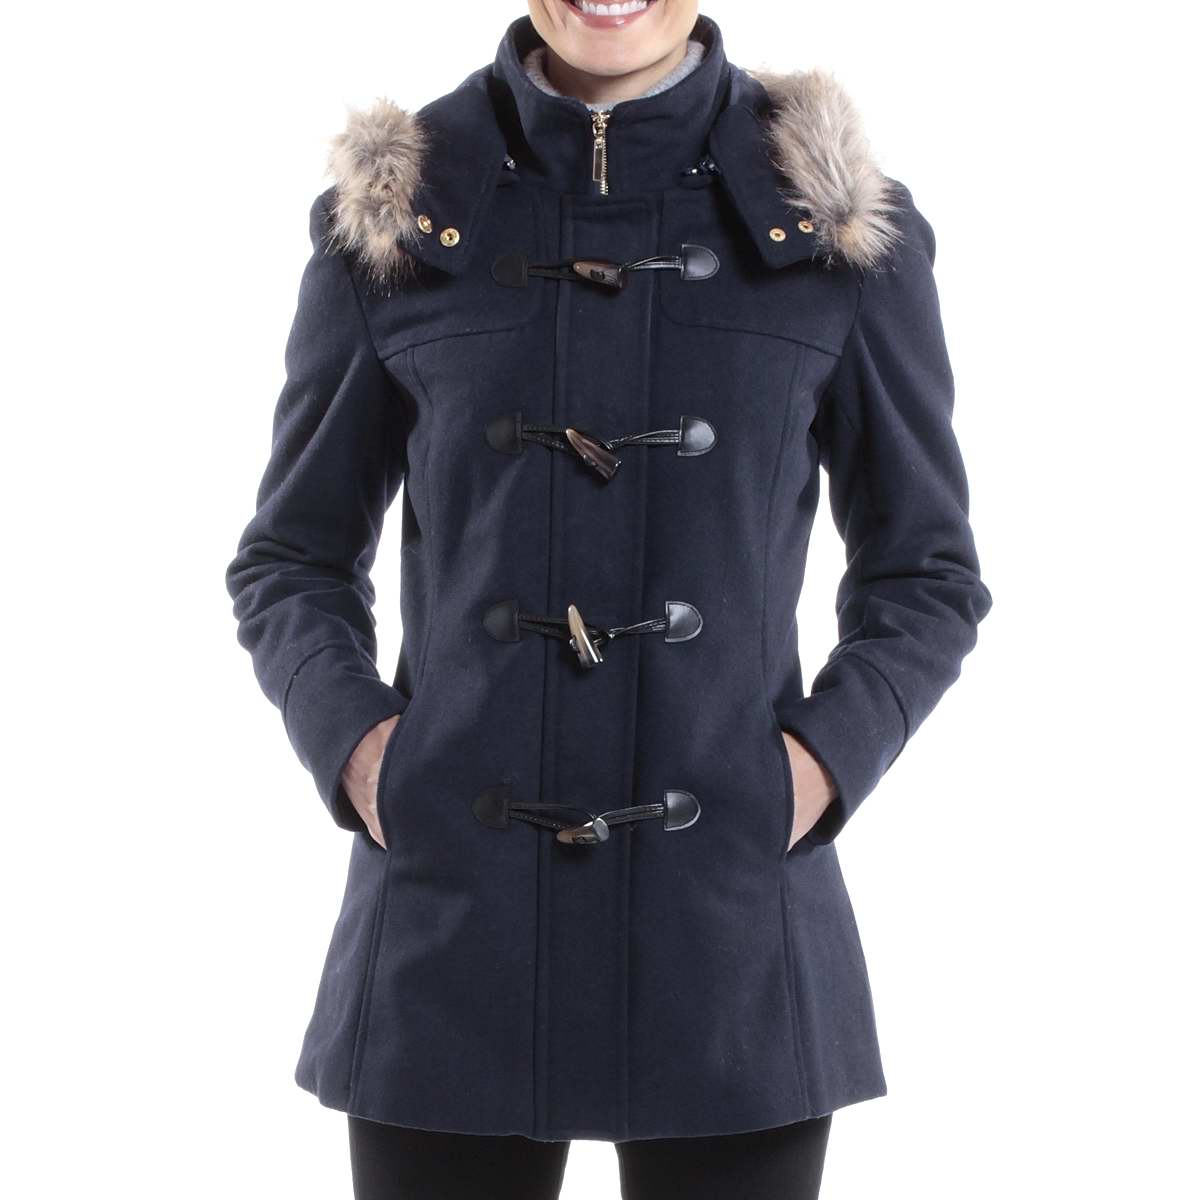 Alpine Swiss Duffy Womens Wool Coat Faux Fur Trim Hooded Parka Jacket - image 5 of 8